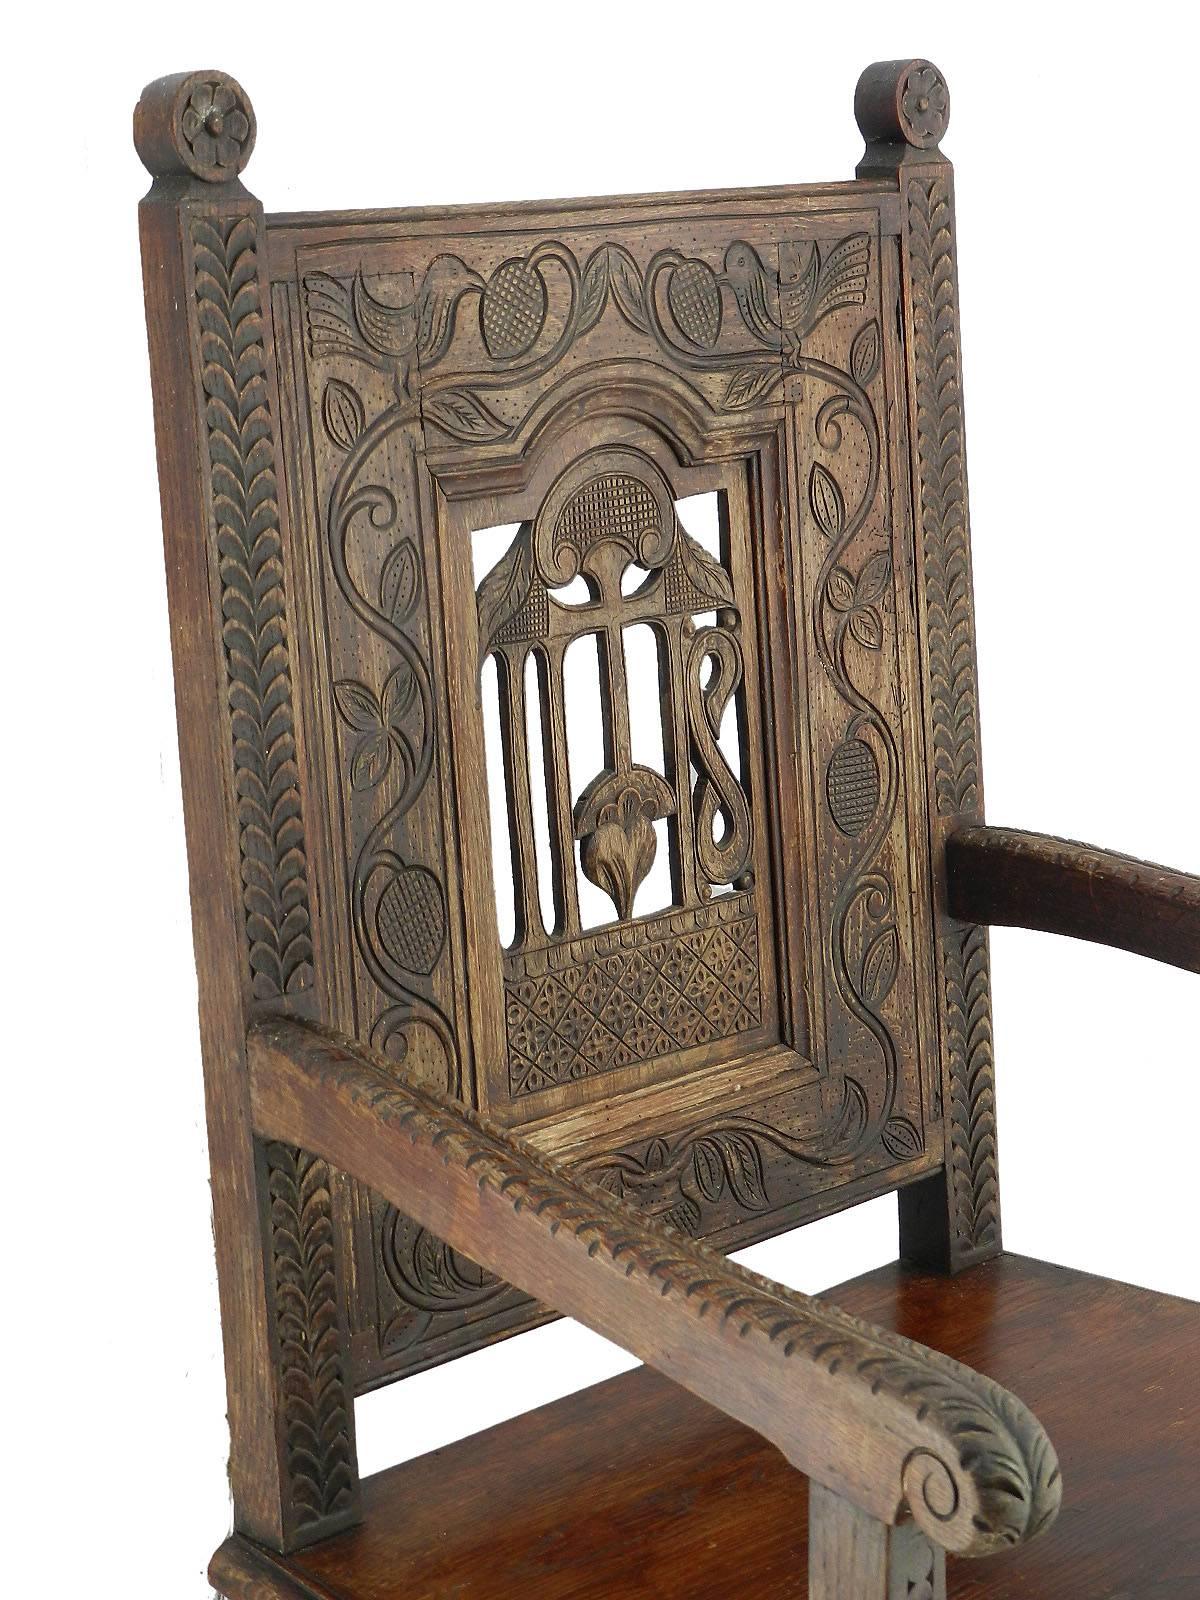 wooden throne chair